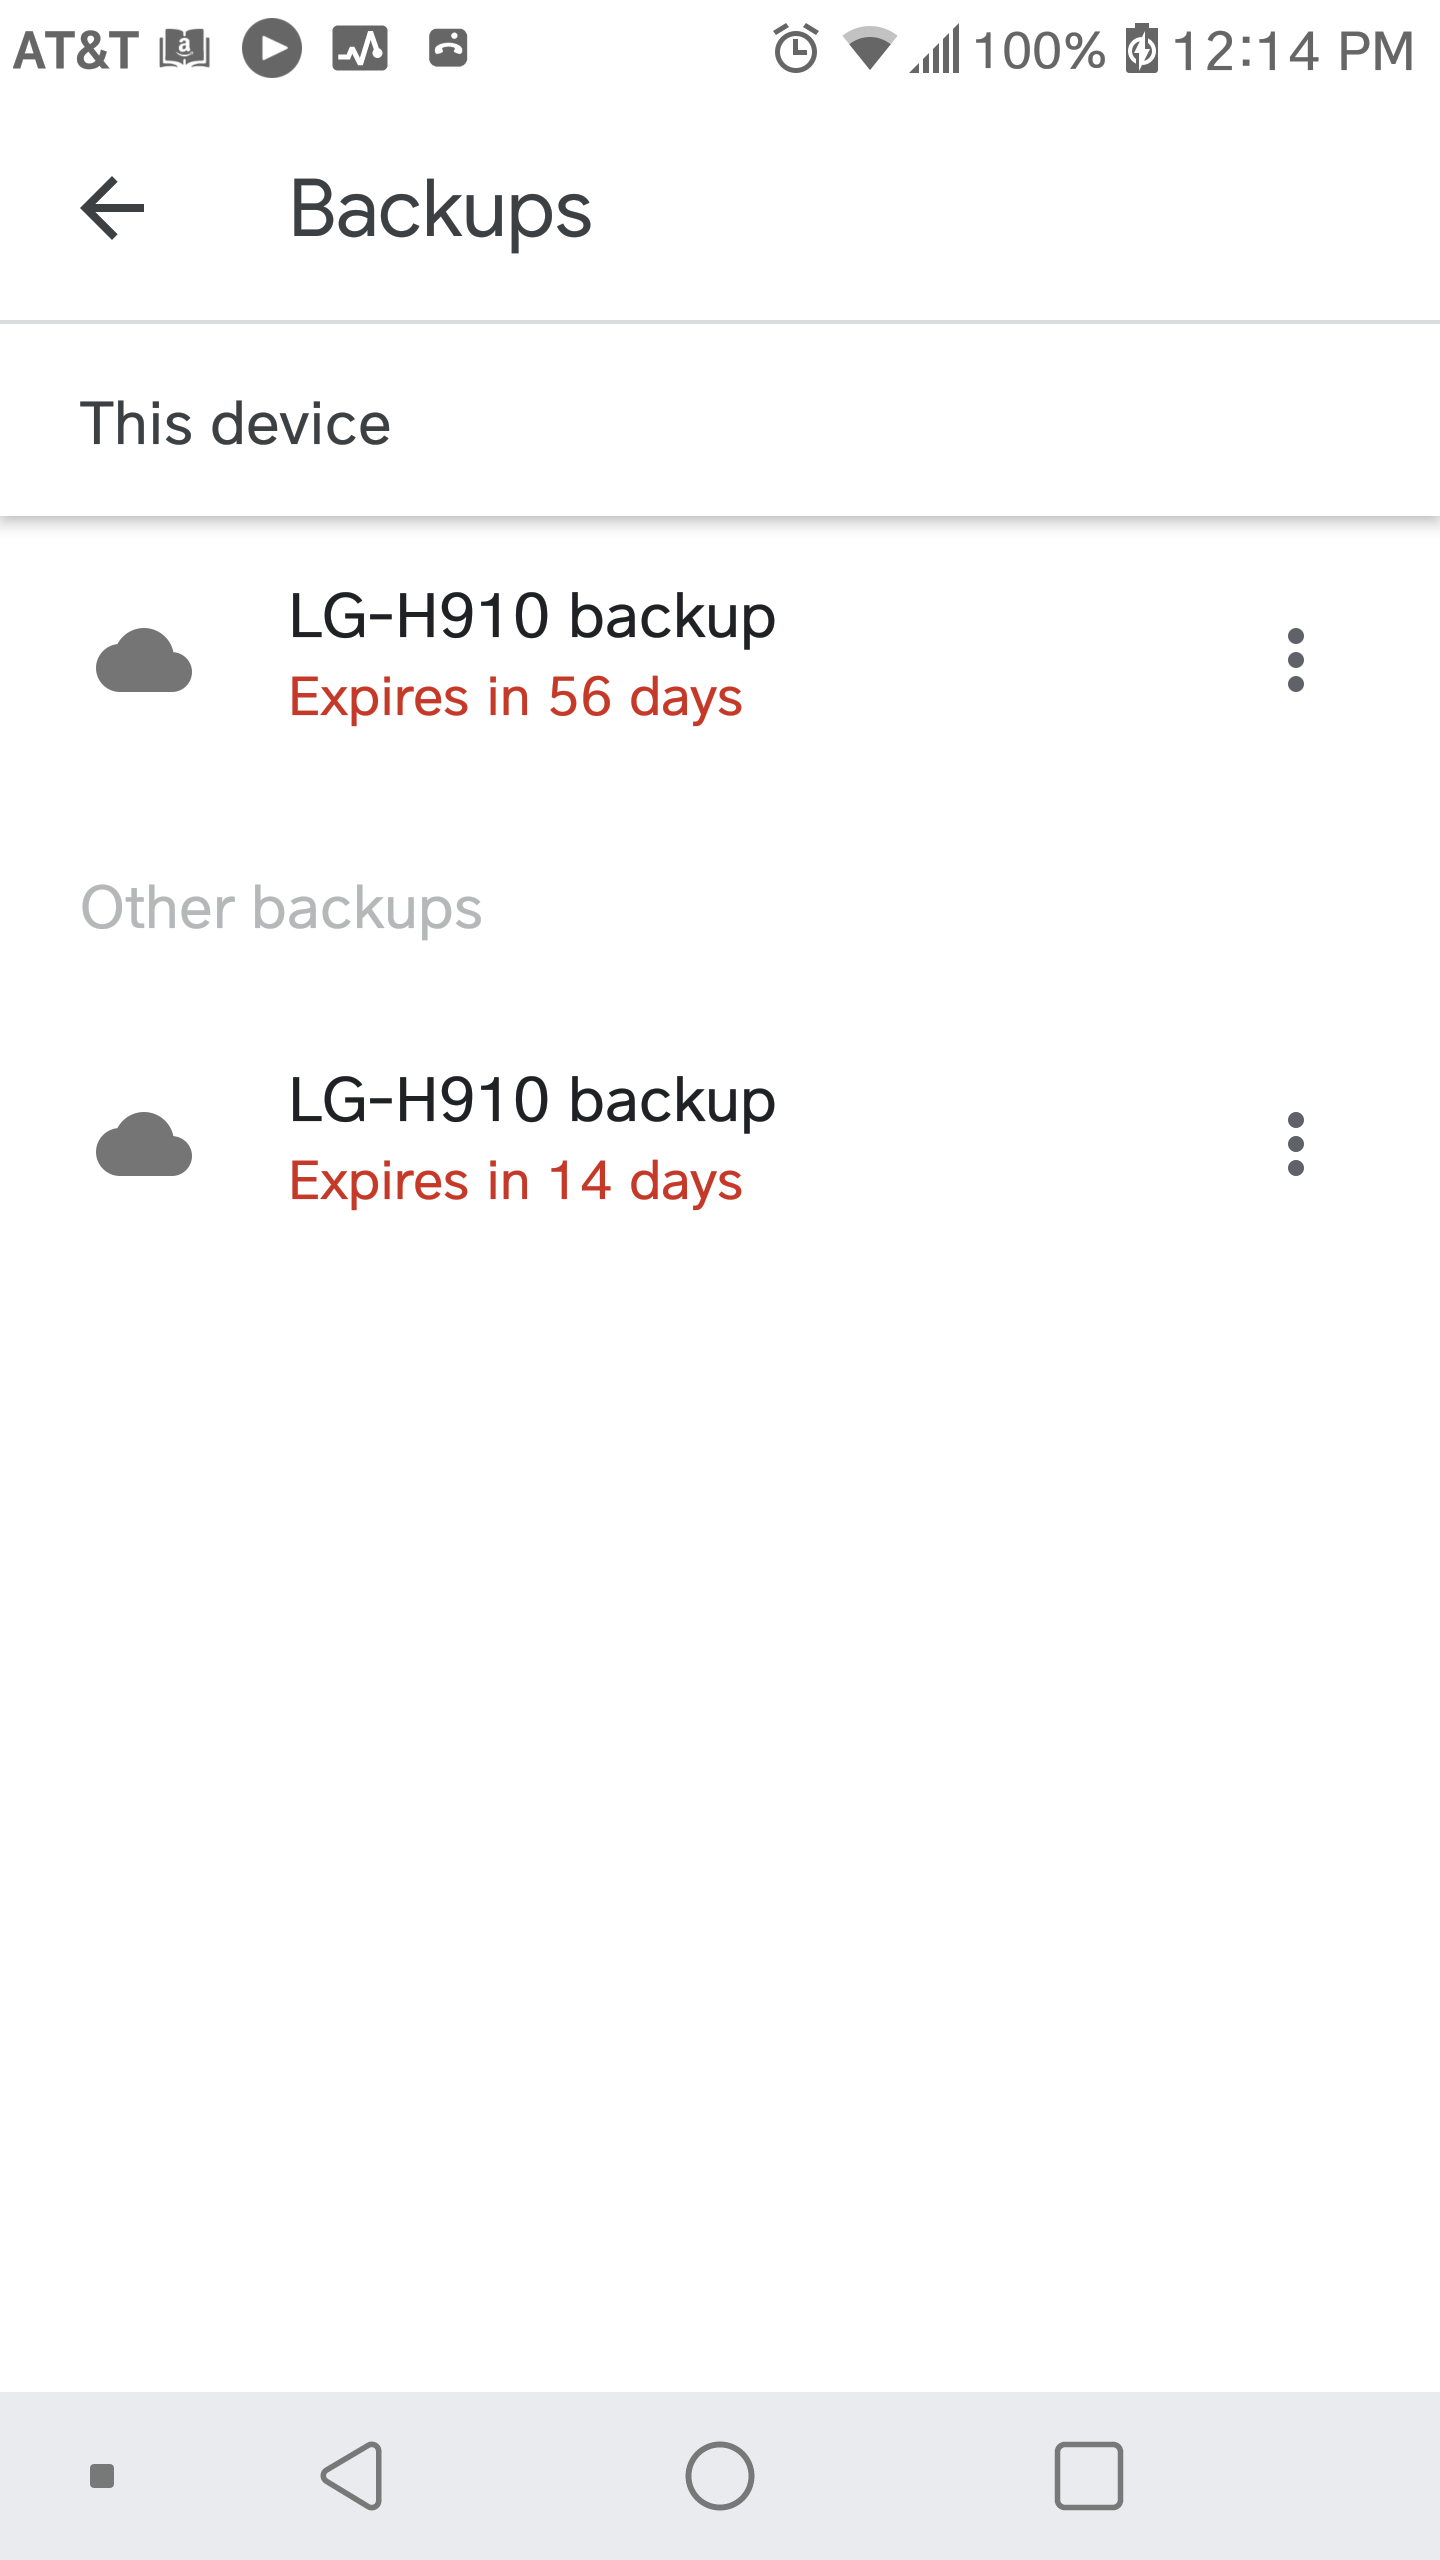 Does backup expire?